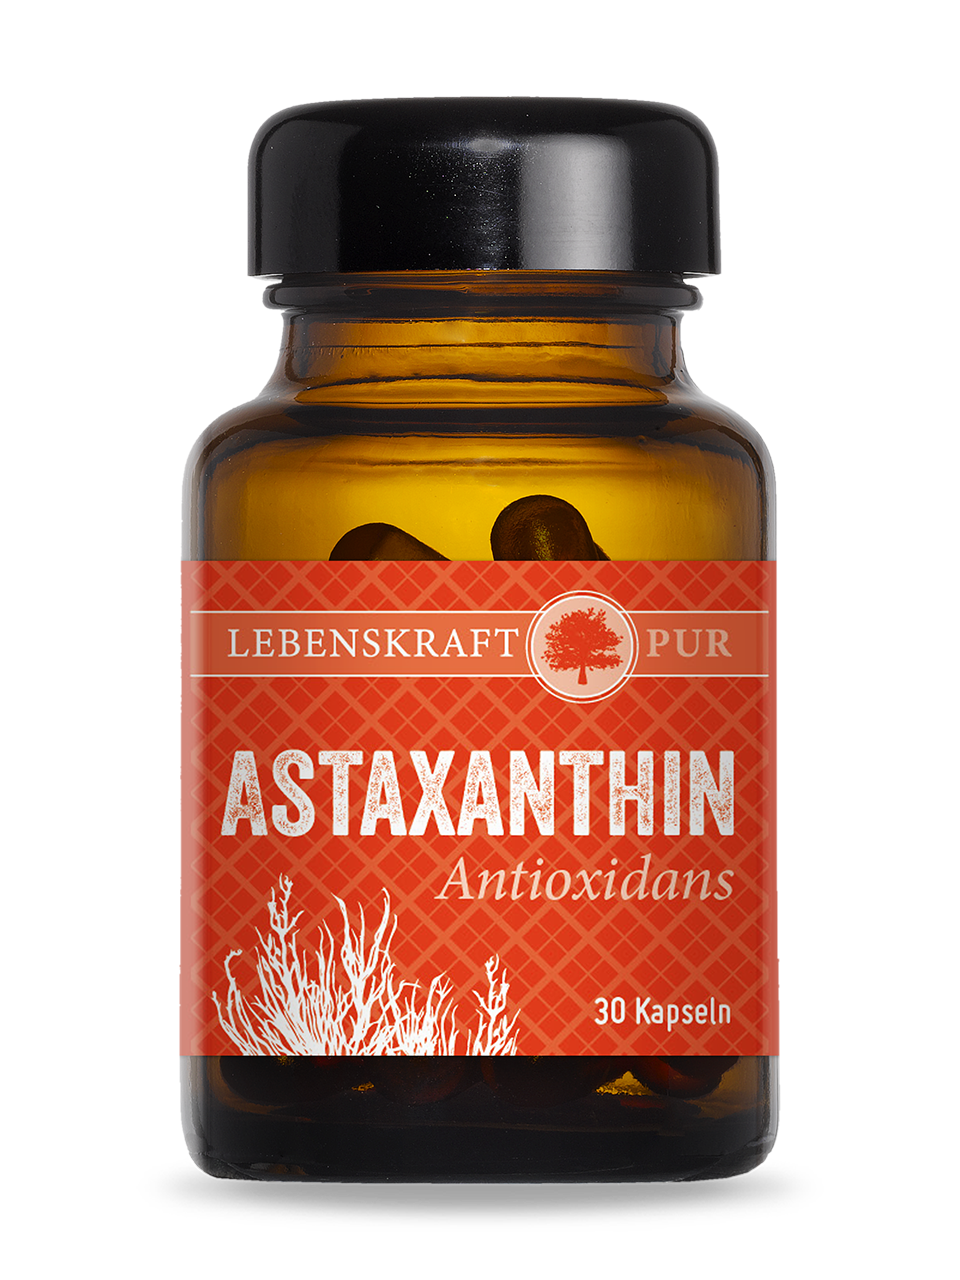 Astaxanthin_Antioxidans_Produktbild_30_01092020_846